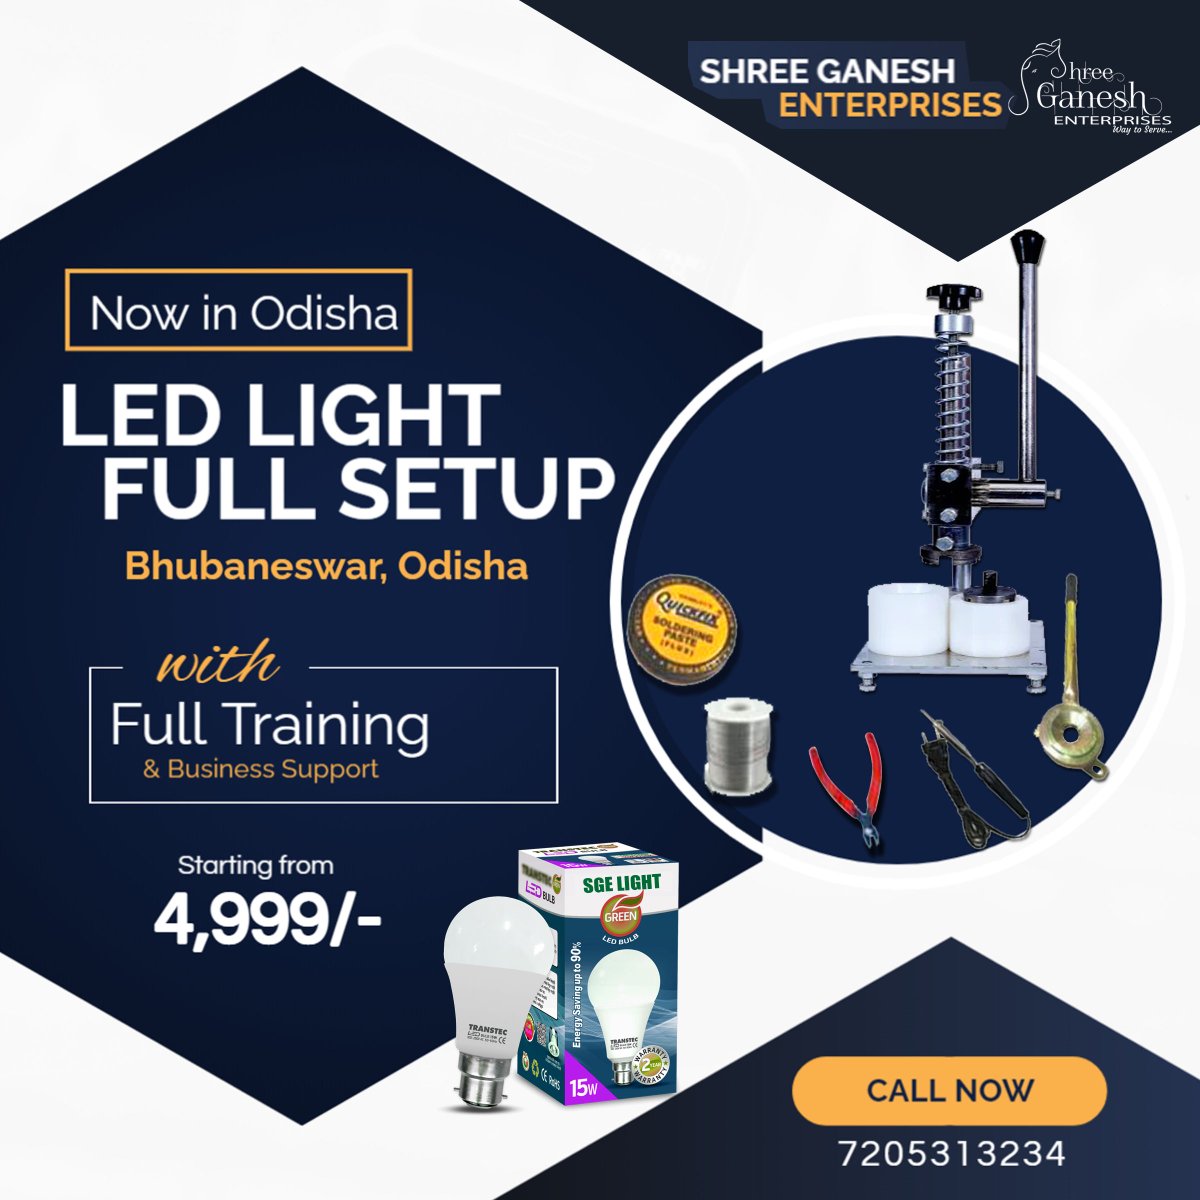 ନିଜ ଗାଁରେ 𝙇𝙀𝘿 𝙇𝙄𝙂𝙃𝙏 ବ୍ୟବସାୟ ଆରମ୍ଭ କରନ୍ତୁ, ଏବଂ ଟଙ୍କା ରୋଜଗାର କରି ନିଜେ ସ୍ବବାଲମ୍ବି ହୁଅନ୍ତୁ… କମ୍ପାନୀ ତରଫରୁ ସମ୍ପୂର୍ଣ୍ଣ ଟ୍ରେନିଂ ଯୋଗେଇ ଦିଆଯିବ… 
ଆମକୁ କଲ କରନ୍ତୁ: 𝟳𝟮𝟬𝟱𝟯𝟭𝟯𝟮𝟯𝟰
#ledbusiness #ledlights #ledlightingproducts #Odisha #OdishaNews #odishabusiness